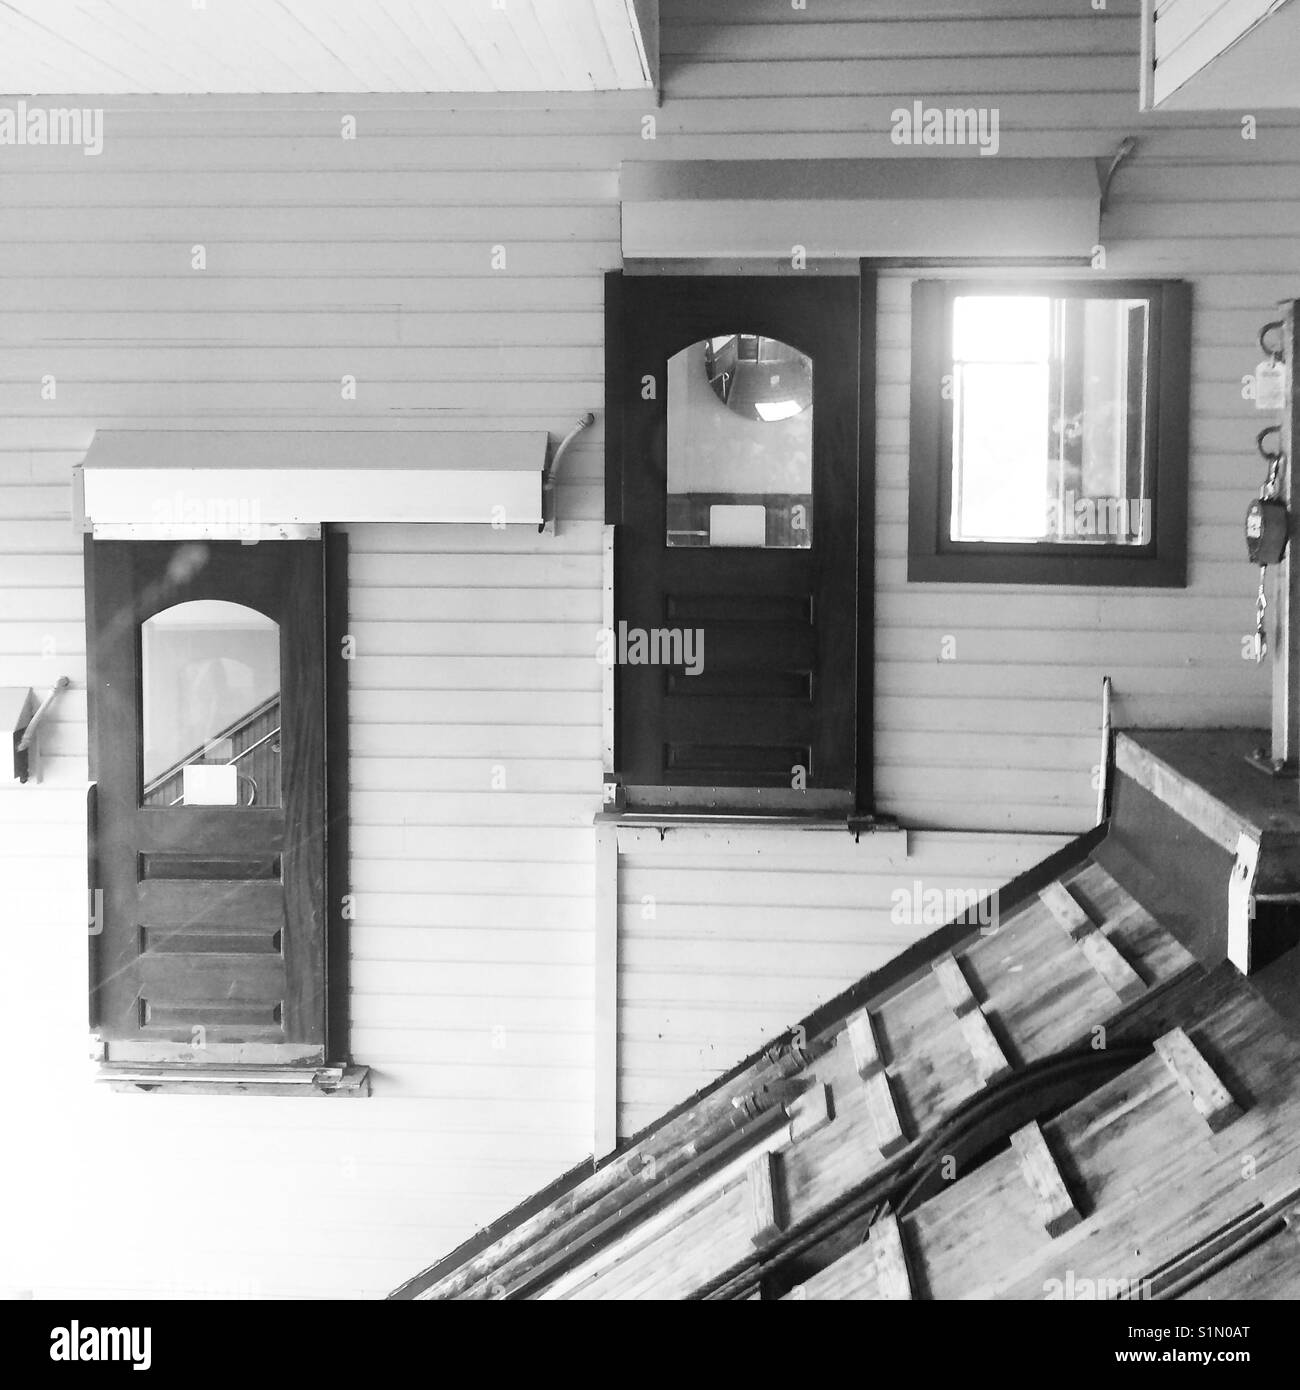 Doors to enter tram, Monongahela Incline, Mount Washington, Pittsburgh, Pennsylvania Stock Photo